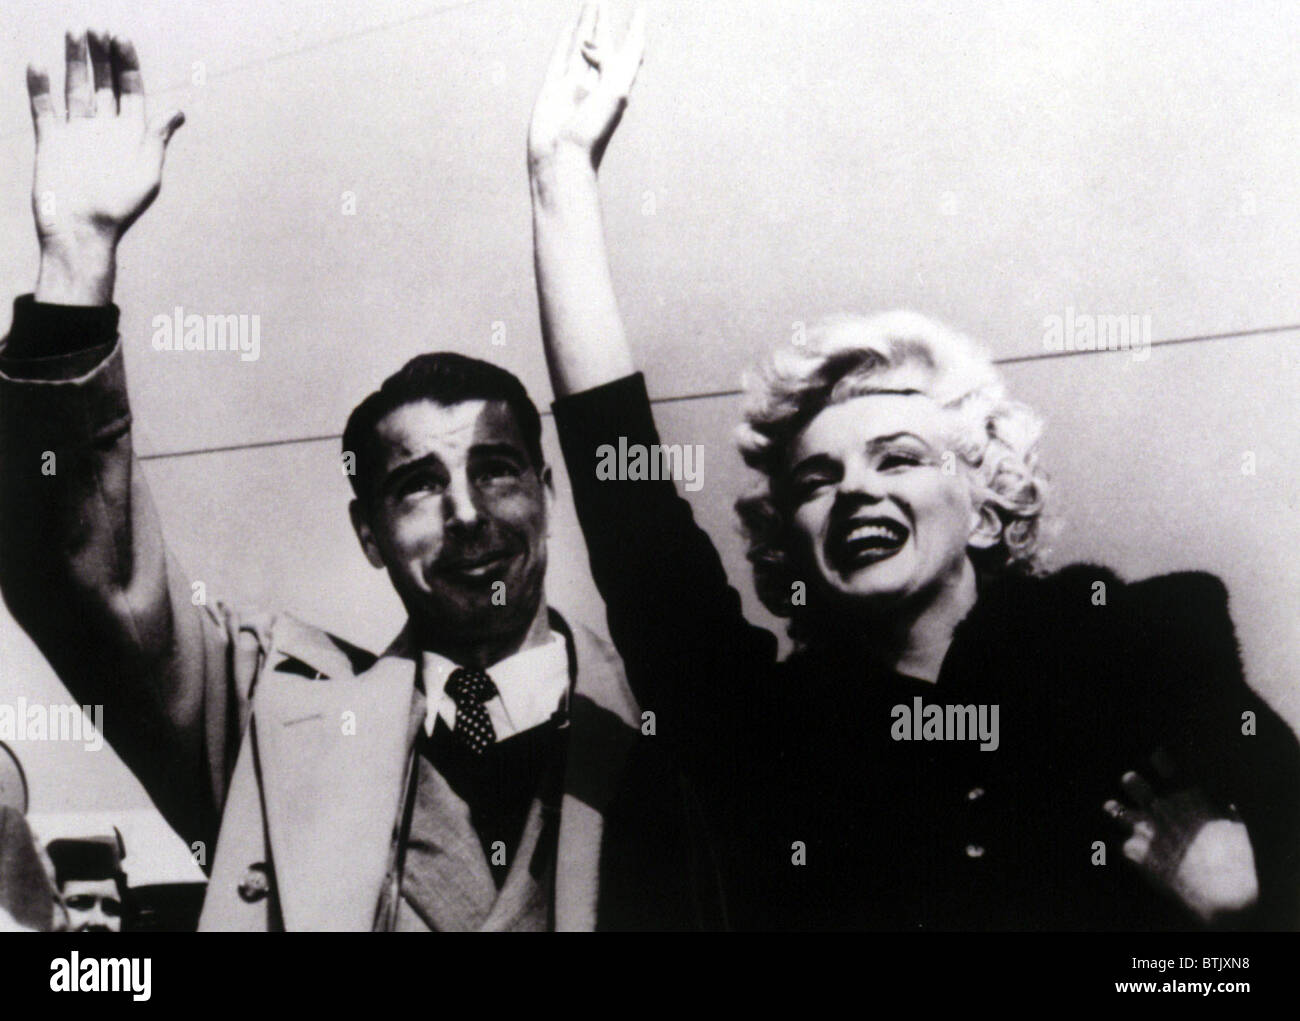 Joe DiMaggio Knew Who Killed Marilyn Monroe - New Biography Details Joe  DiMaggio and Marilyn Monroe's Romance